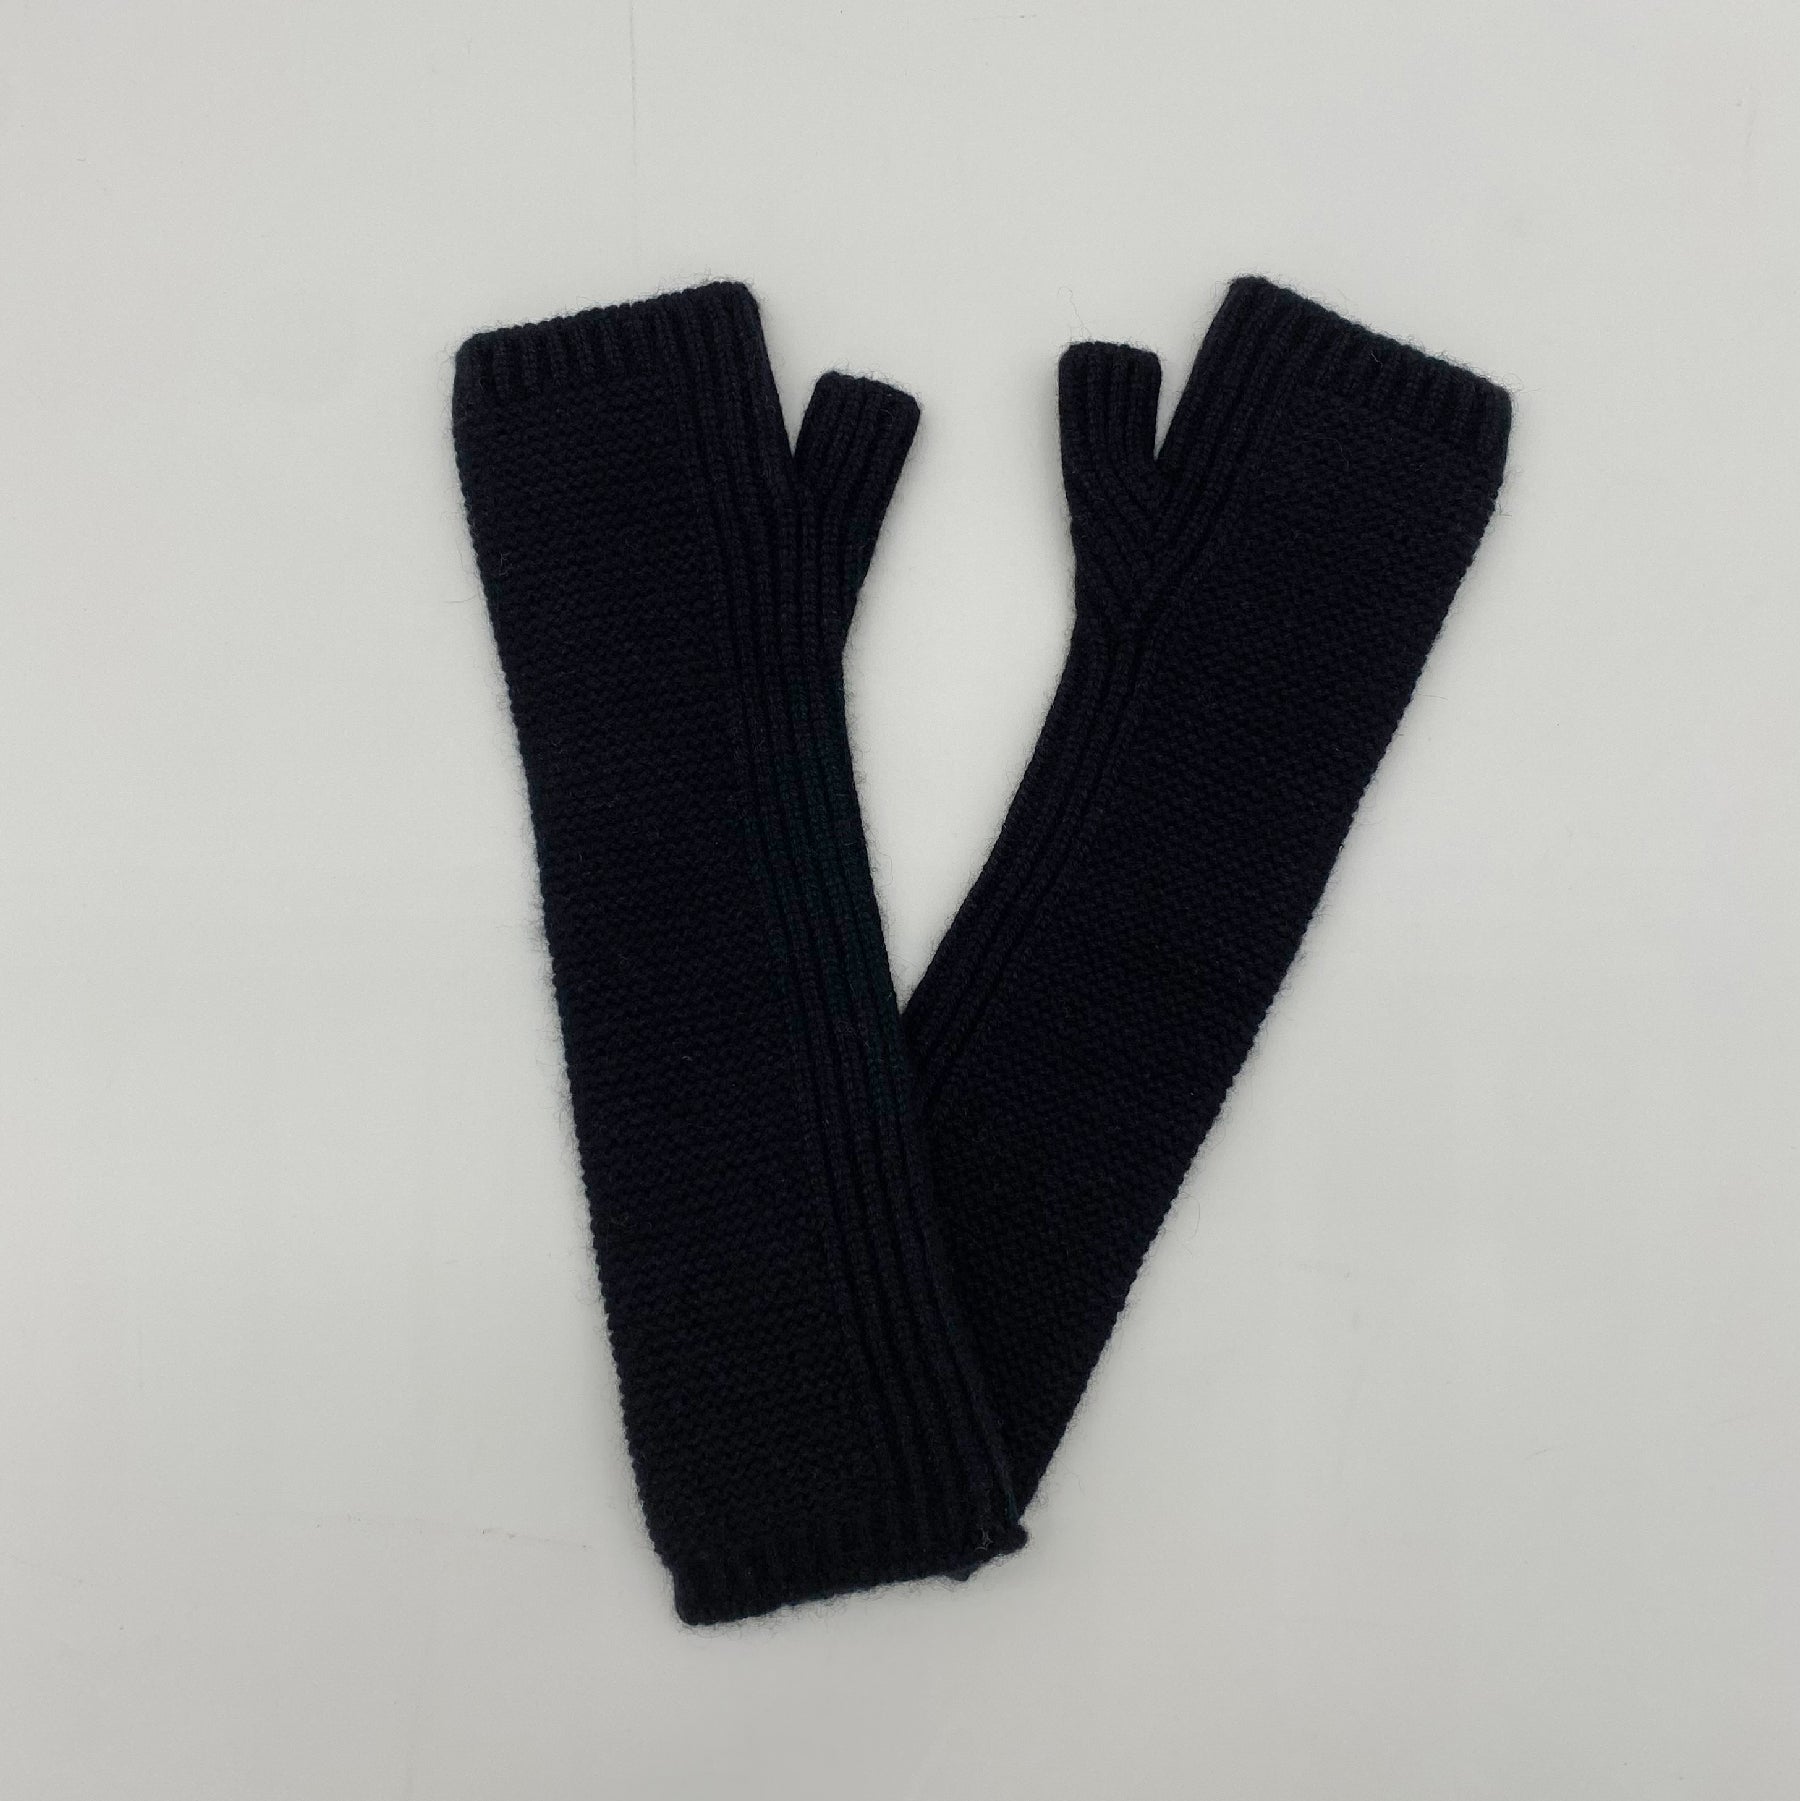 Black Cashmere Fingerless Gloves / Wrist Warmers